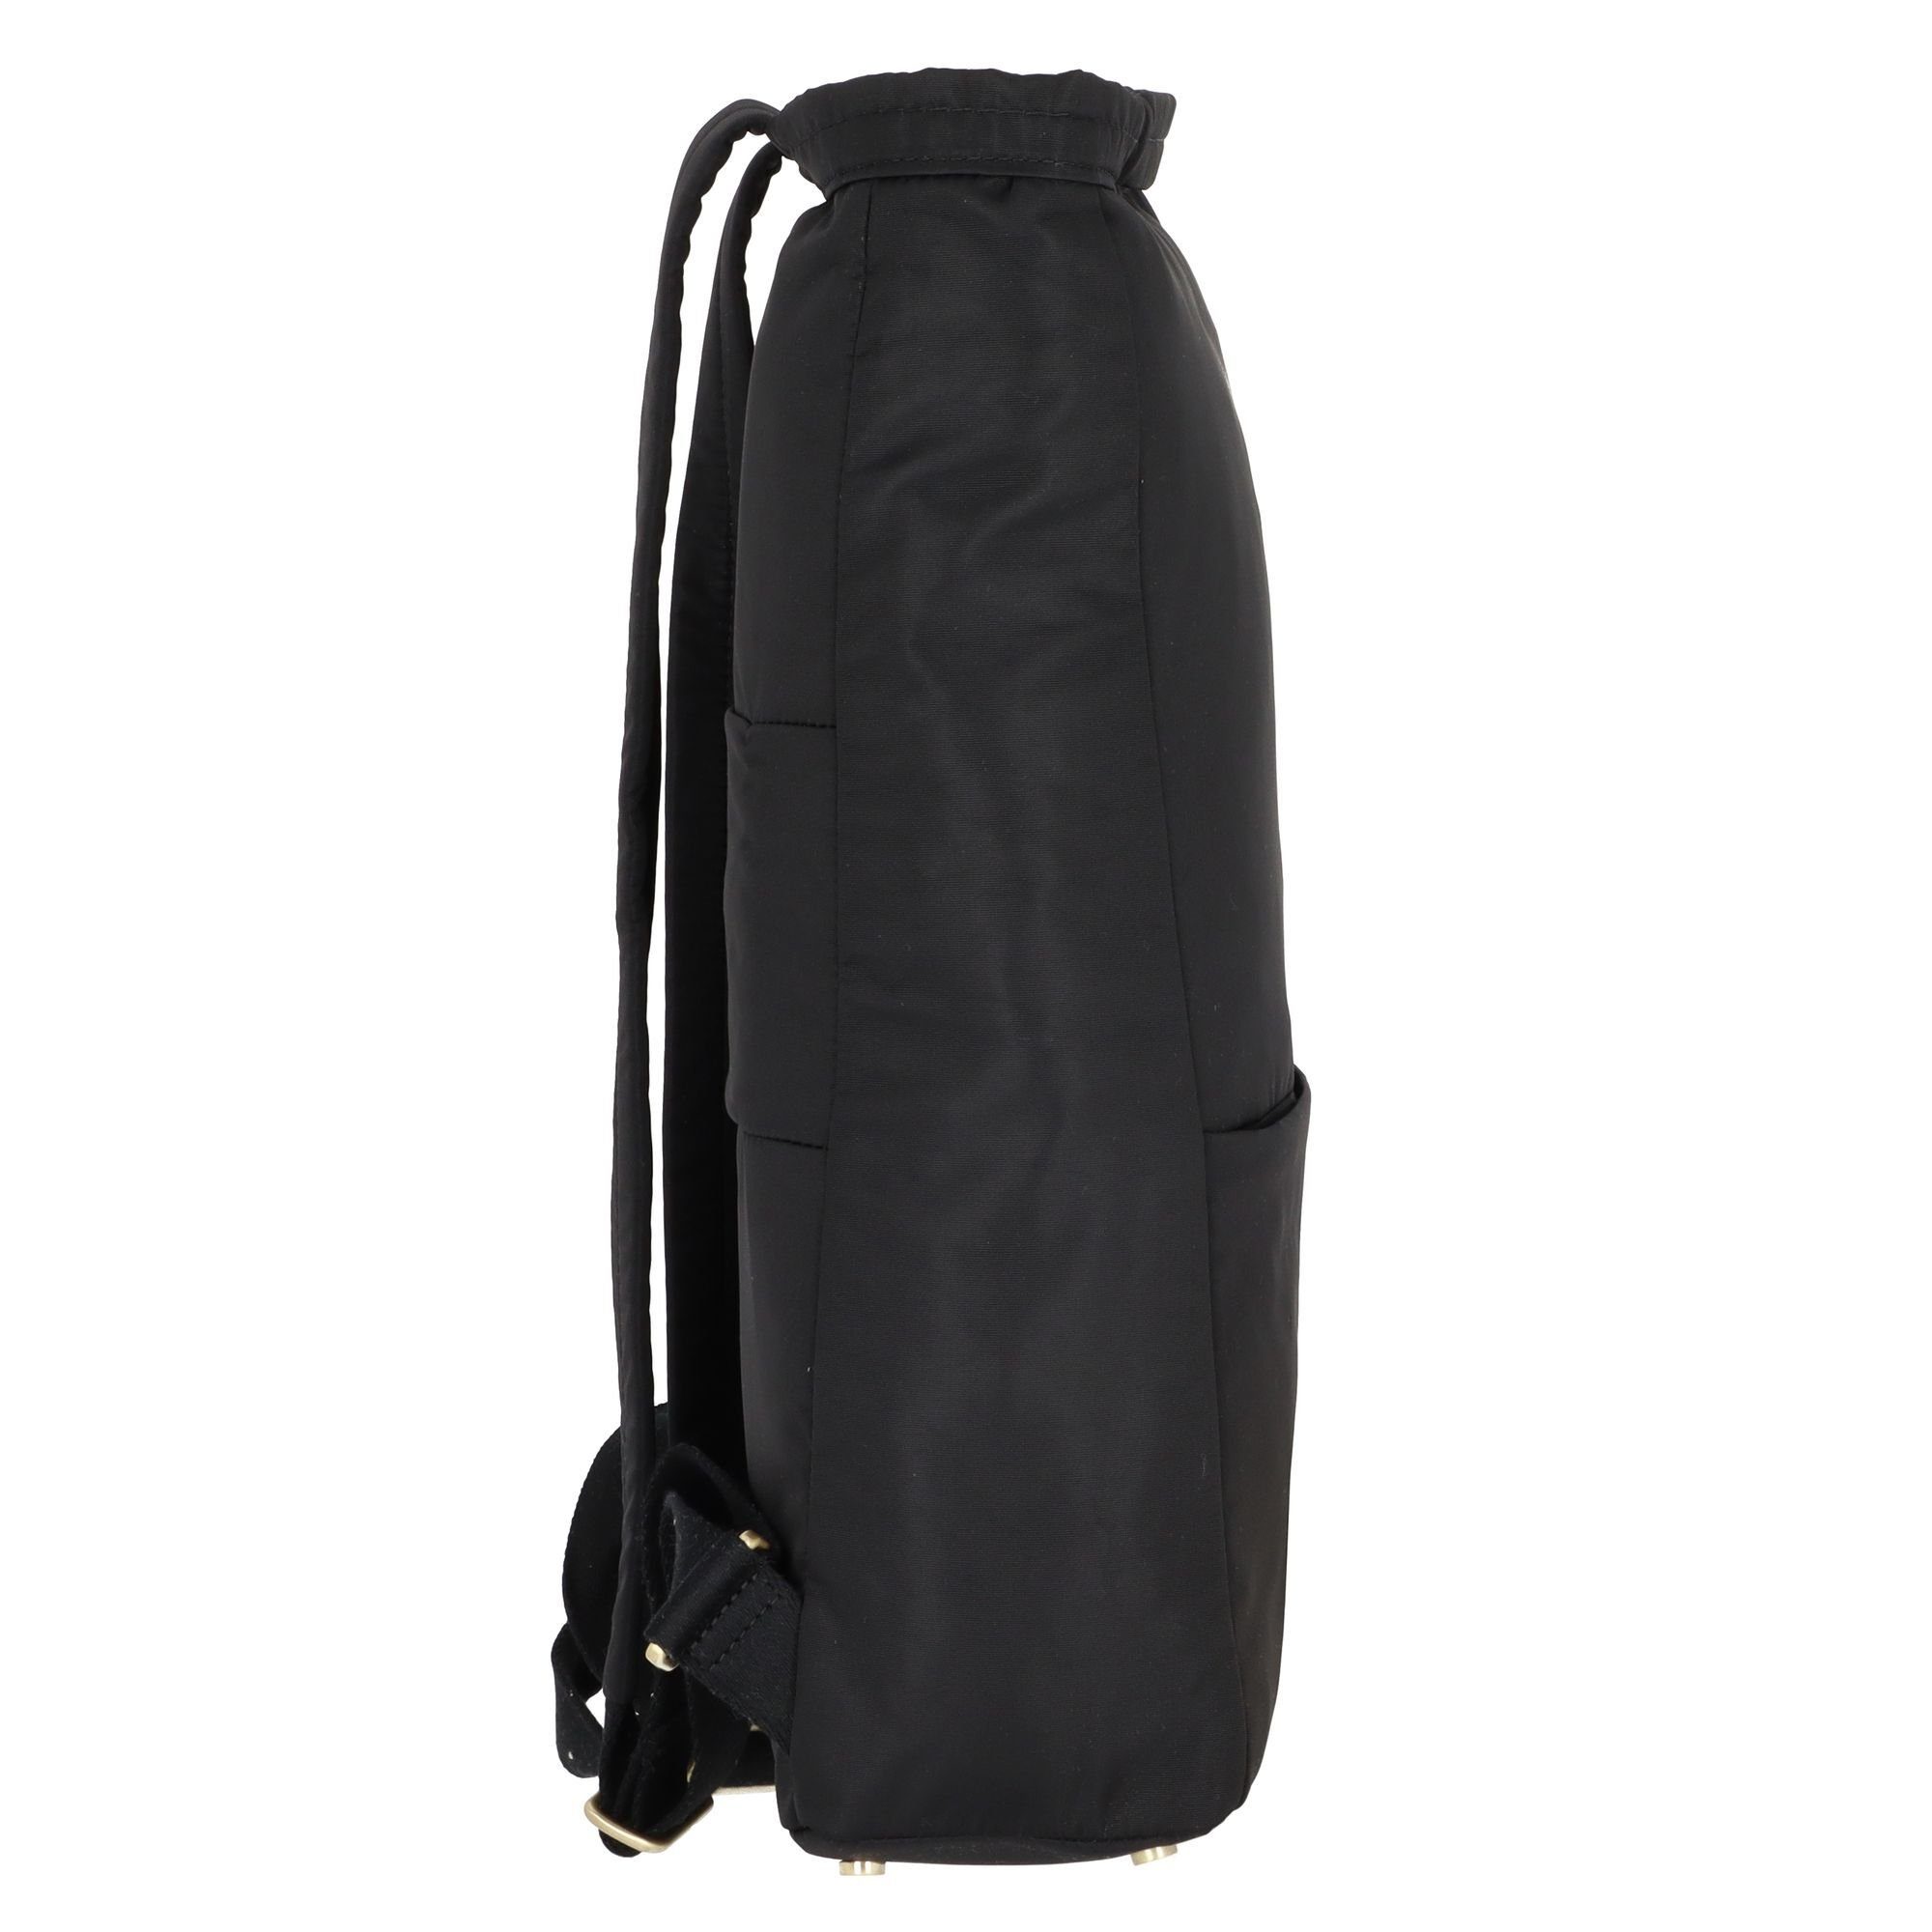 Daypack black BREE Juna Polyester Textile,